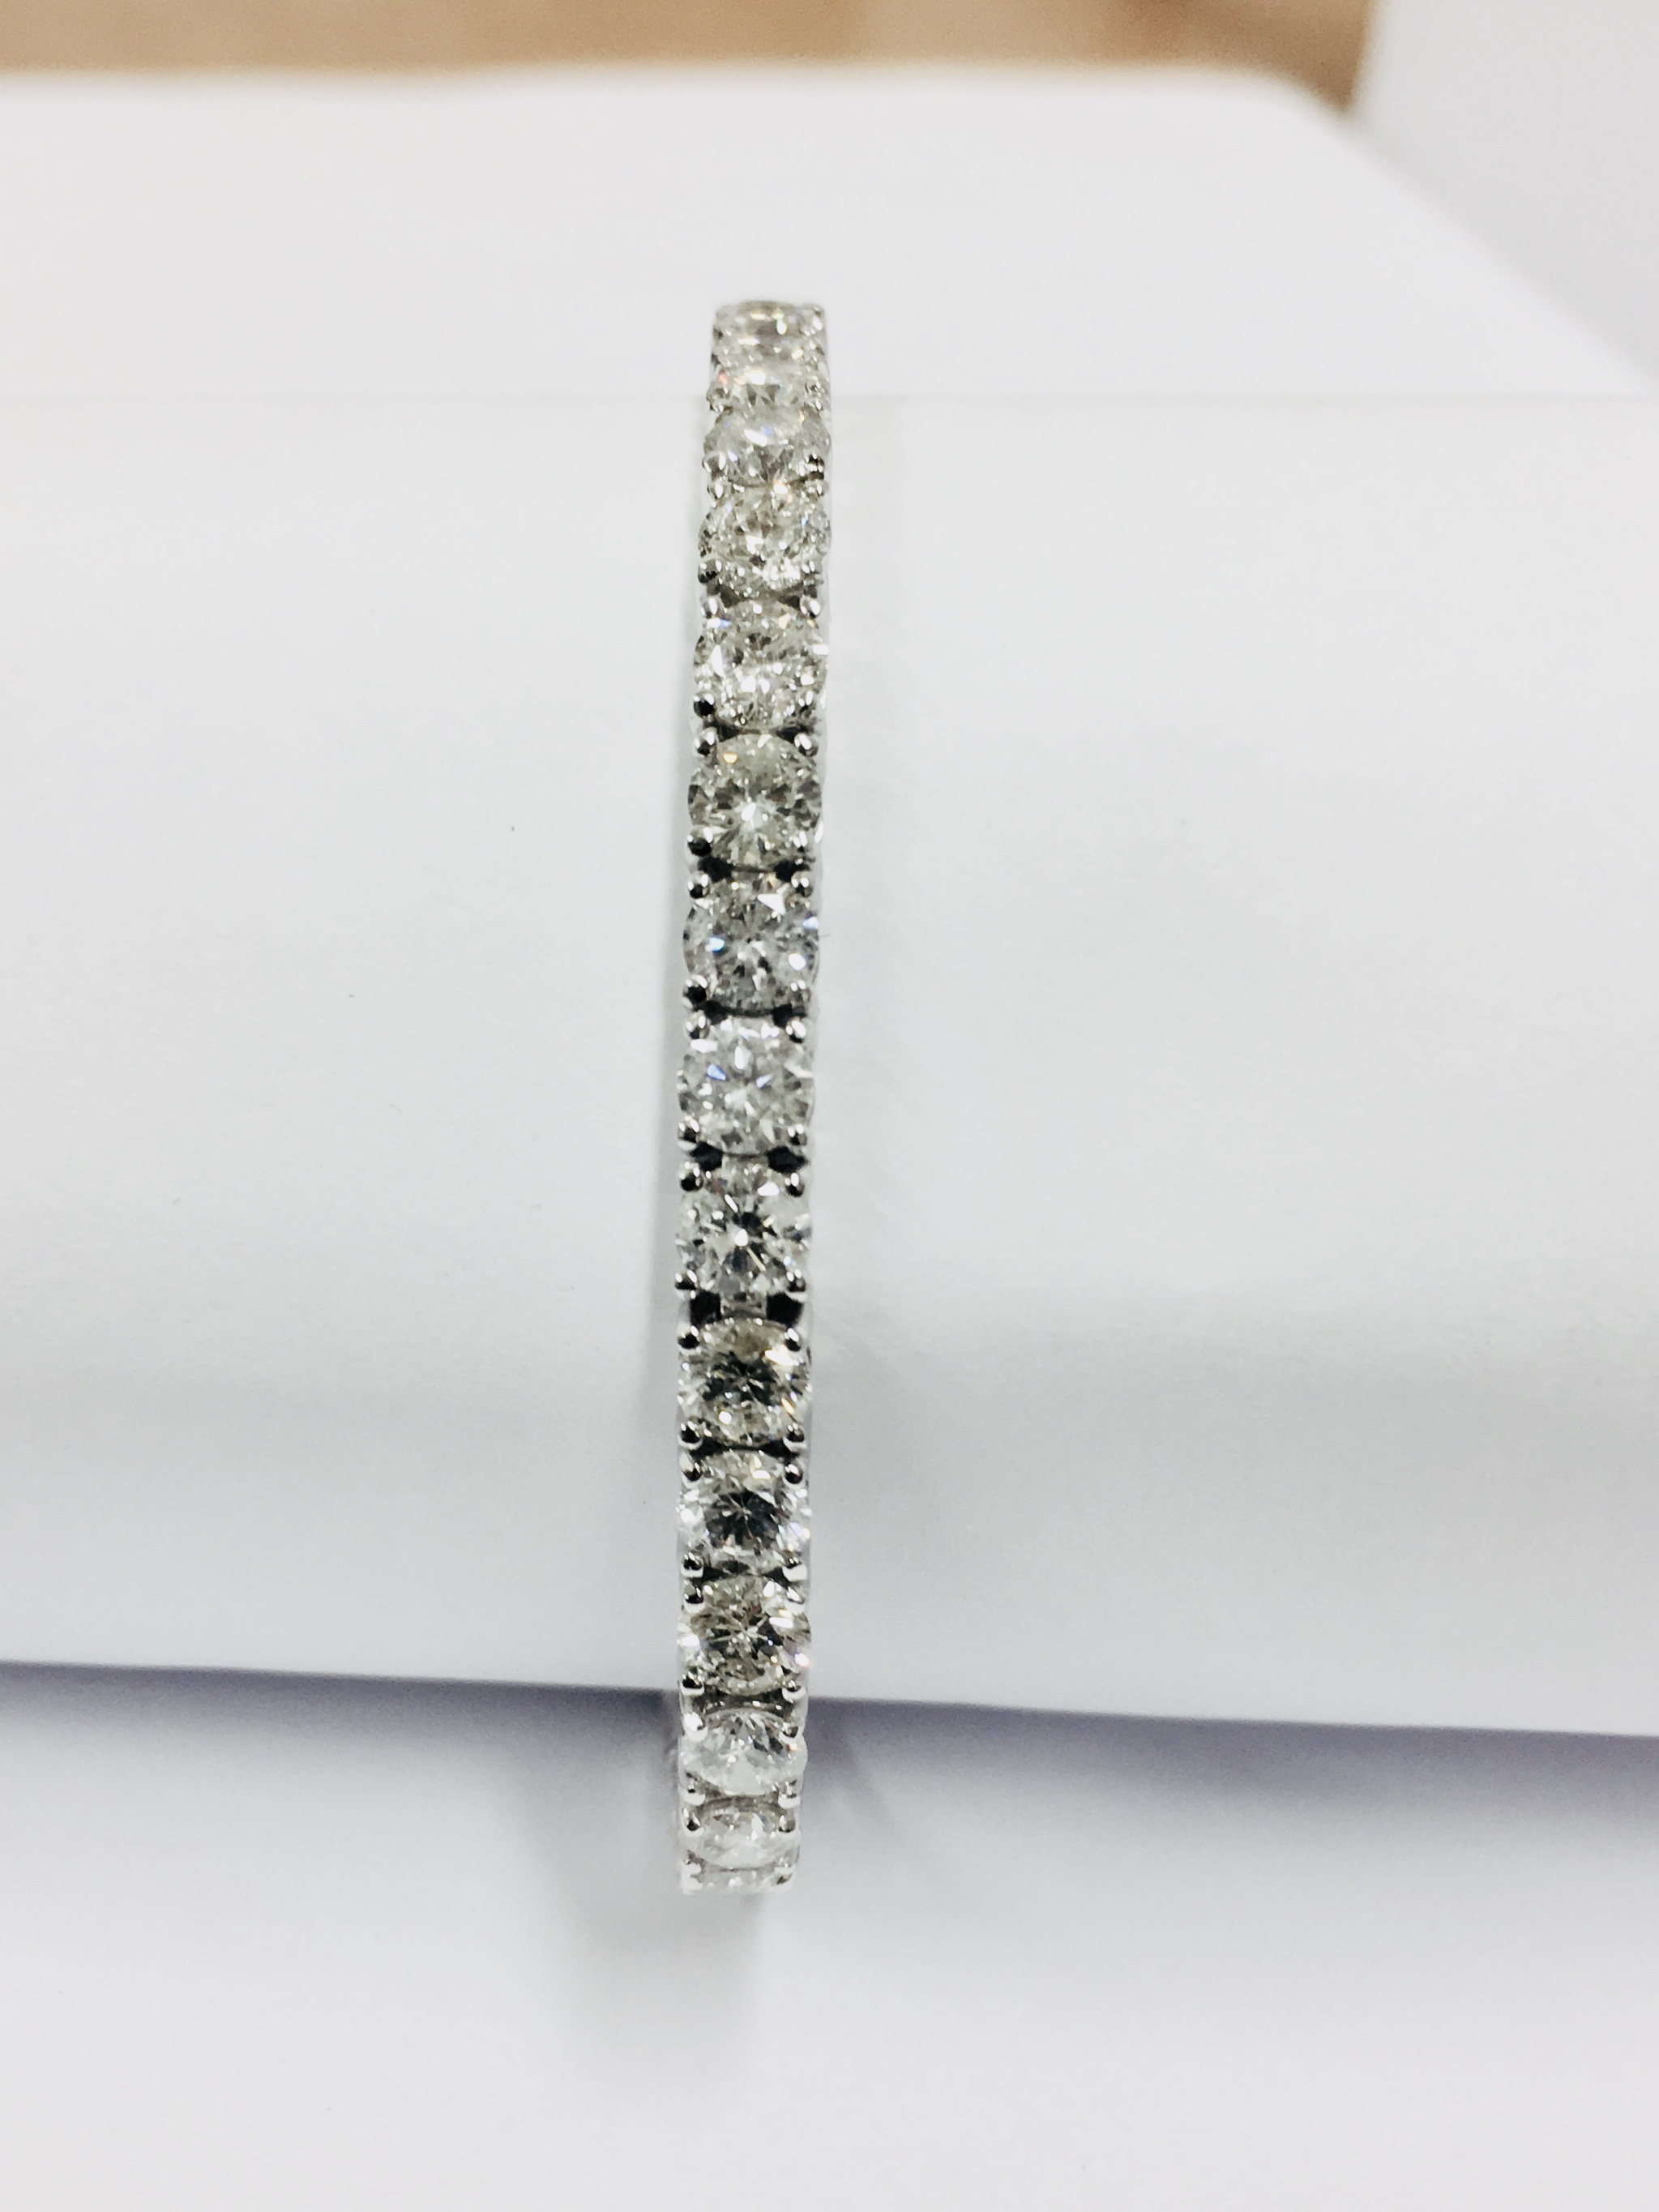 8.00ct Diamond tennis bracelet set with brilliant cut diamonds of G colour - Image 11 of 42